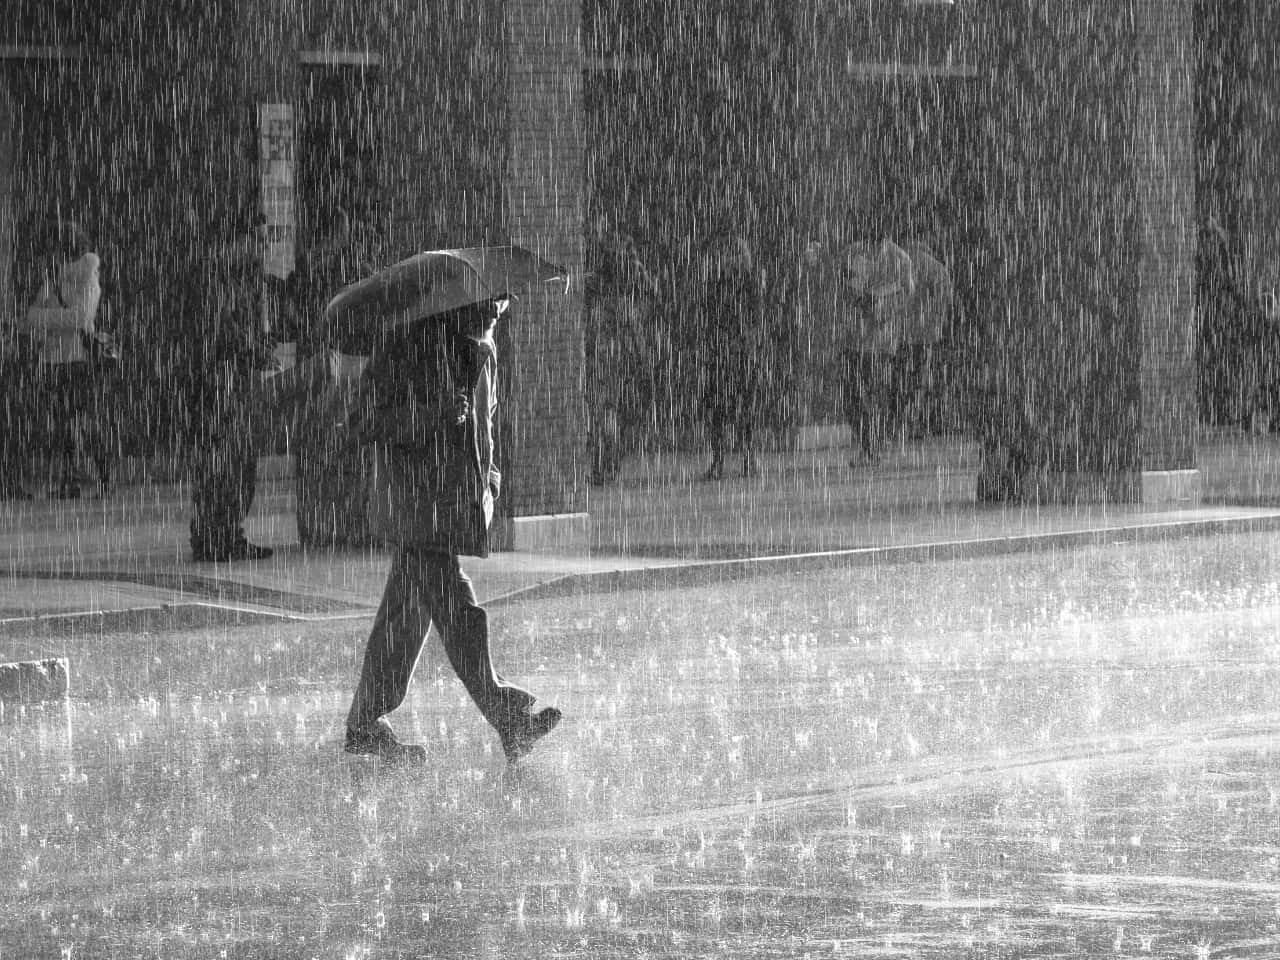 Manmed Paraply På Regnig Dag I Svartvitt Foto